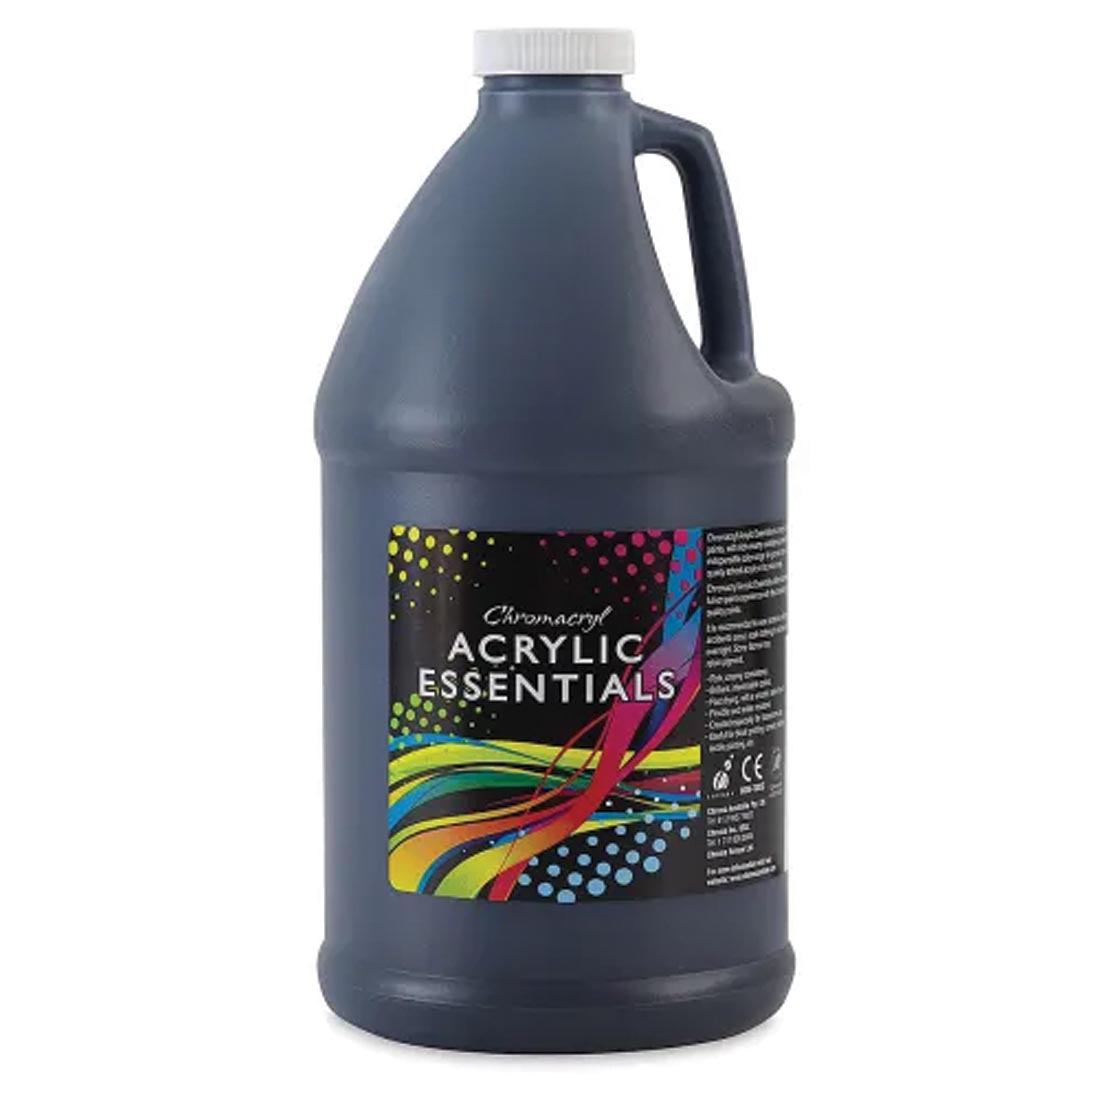 1/2 Gallon of Black Chromacryl Acrylic Essentials Paint